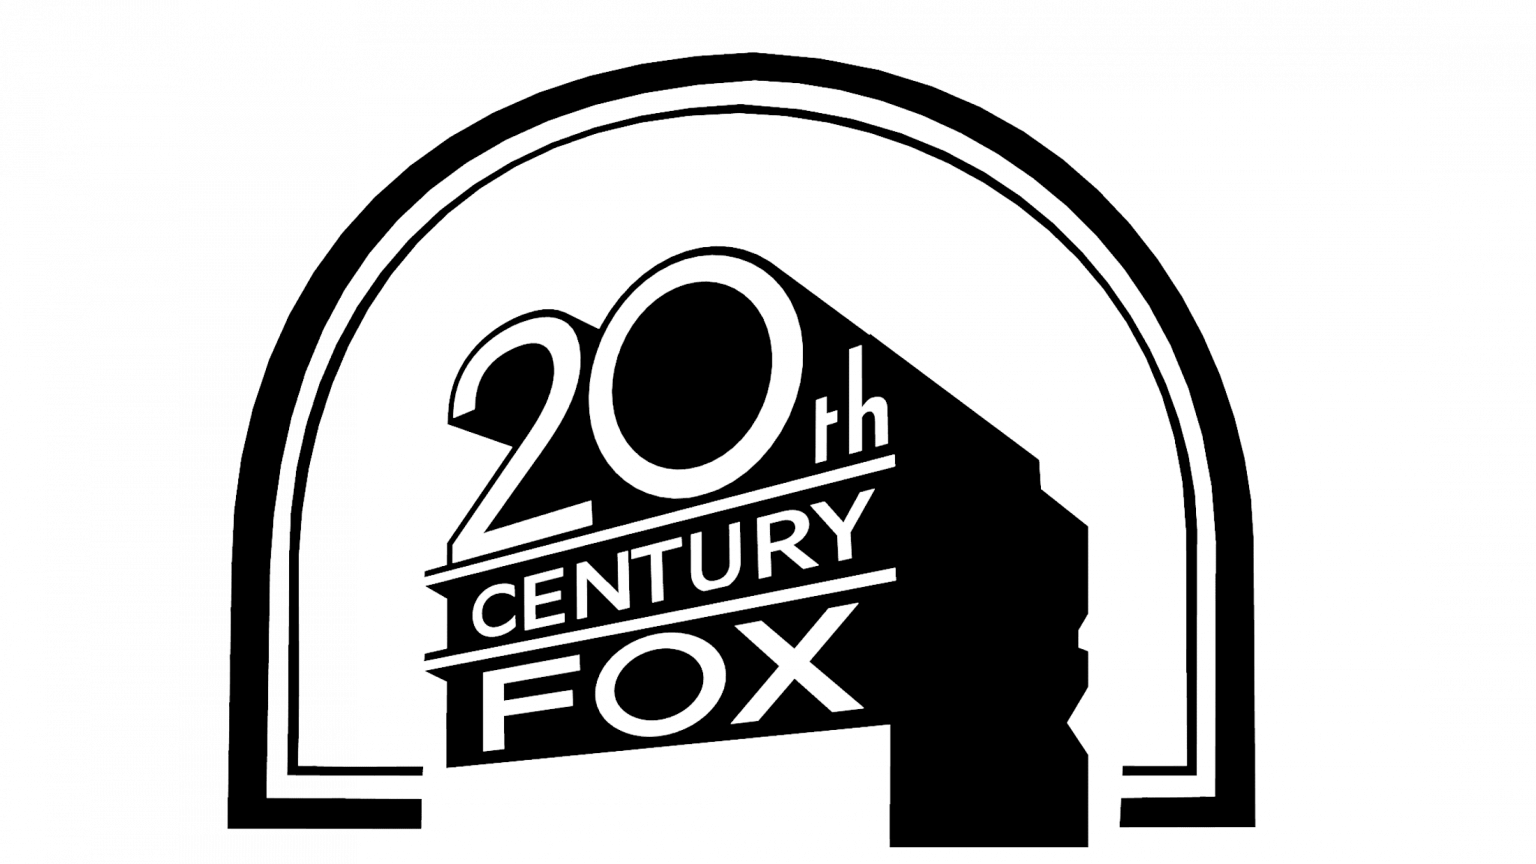 20th Century Fox Logo Black